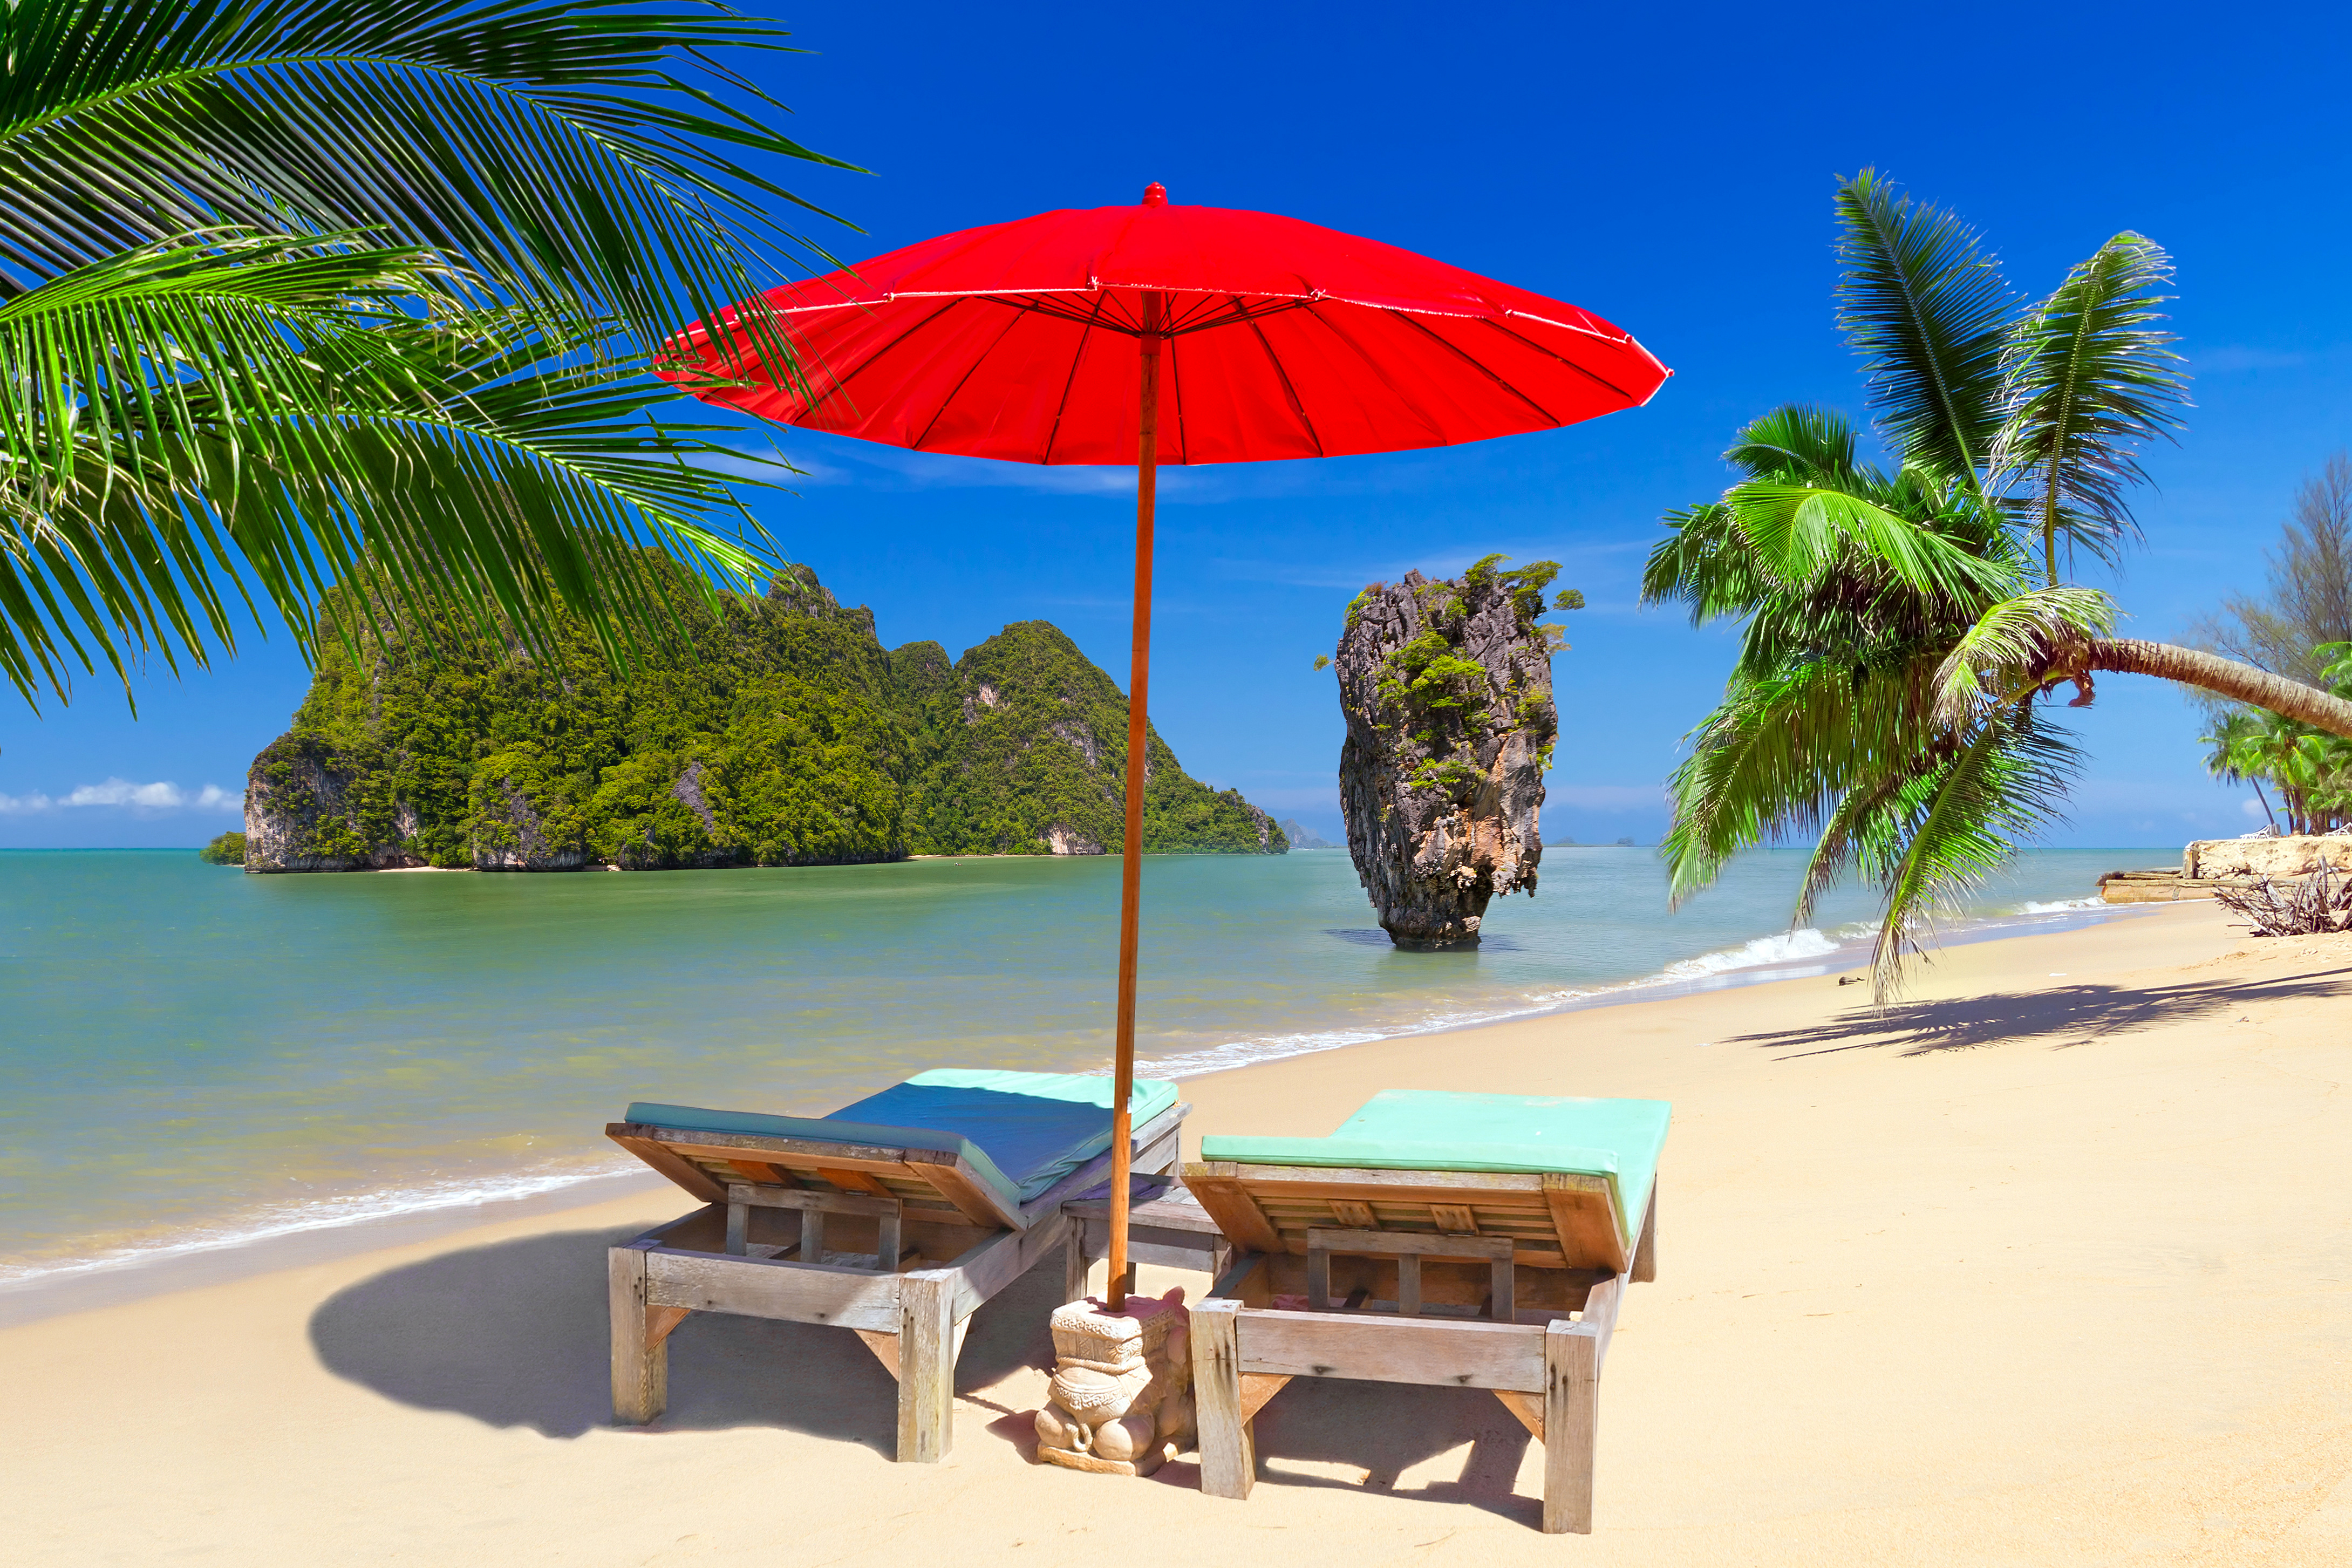 Descarga gratuita de fondo de pantalla para móvil de Playa, Silla, Océano, Día Festivo, Zona Tropical, Paraguas, Fotografía, Tailandia, Palmera, Tropico.